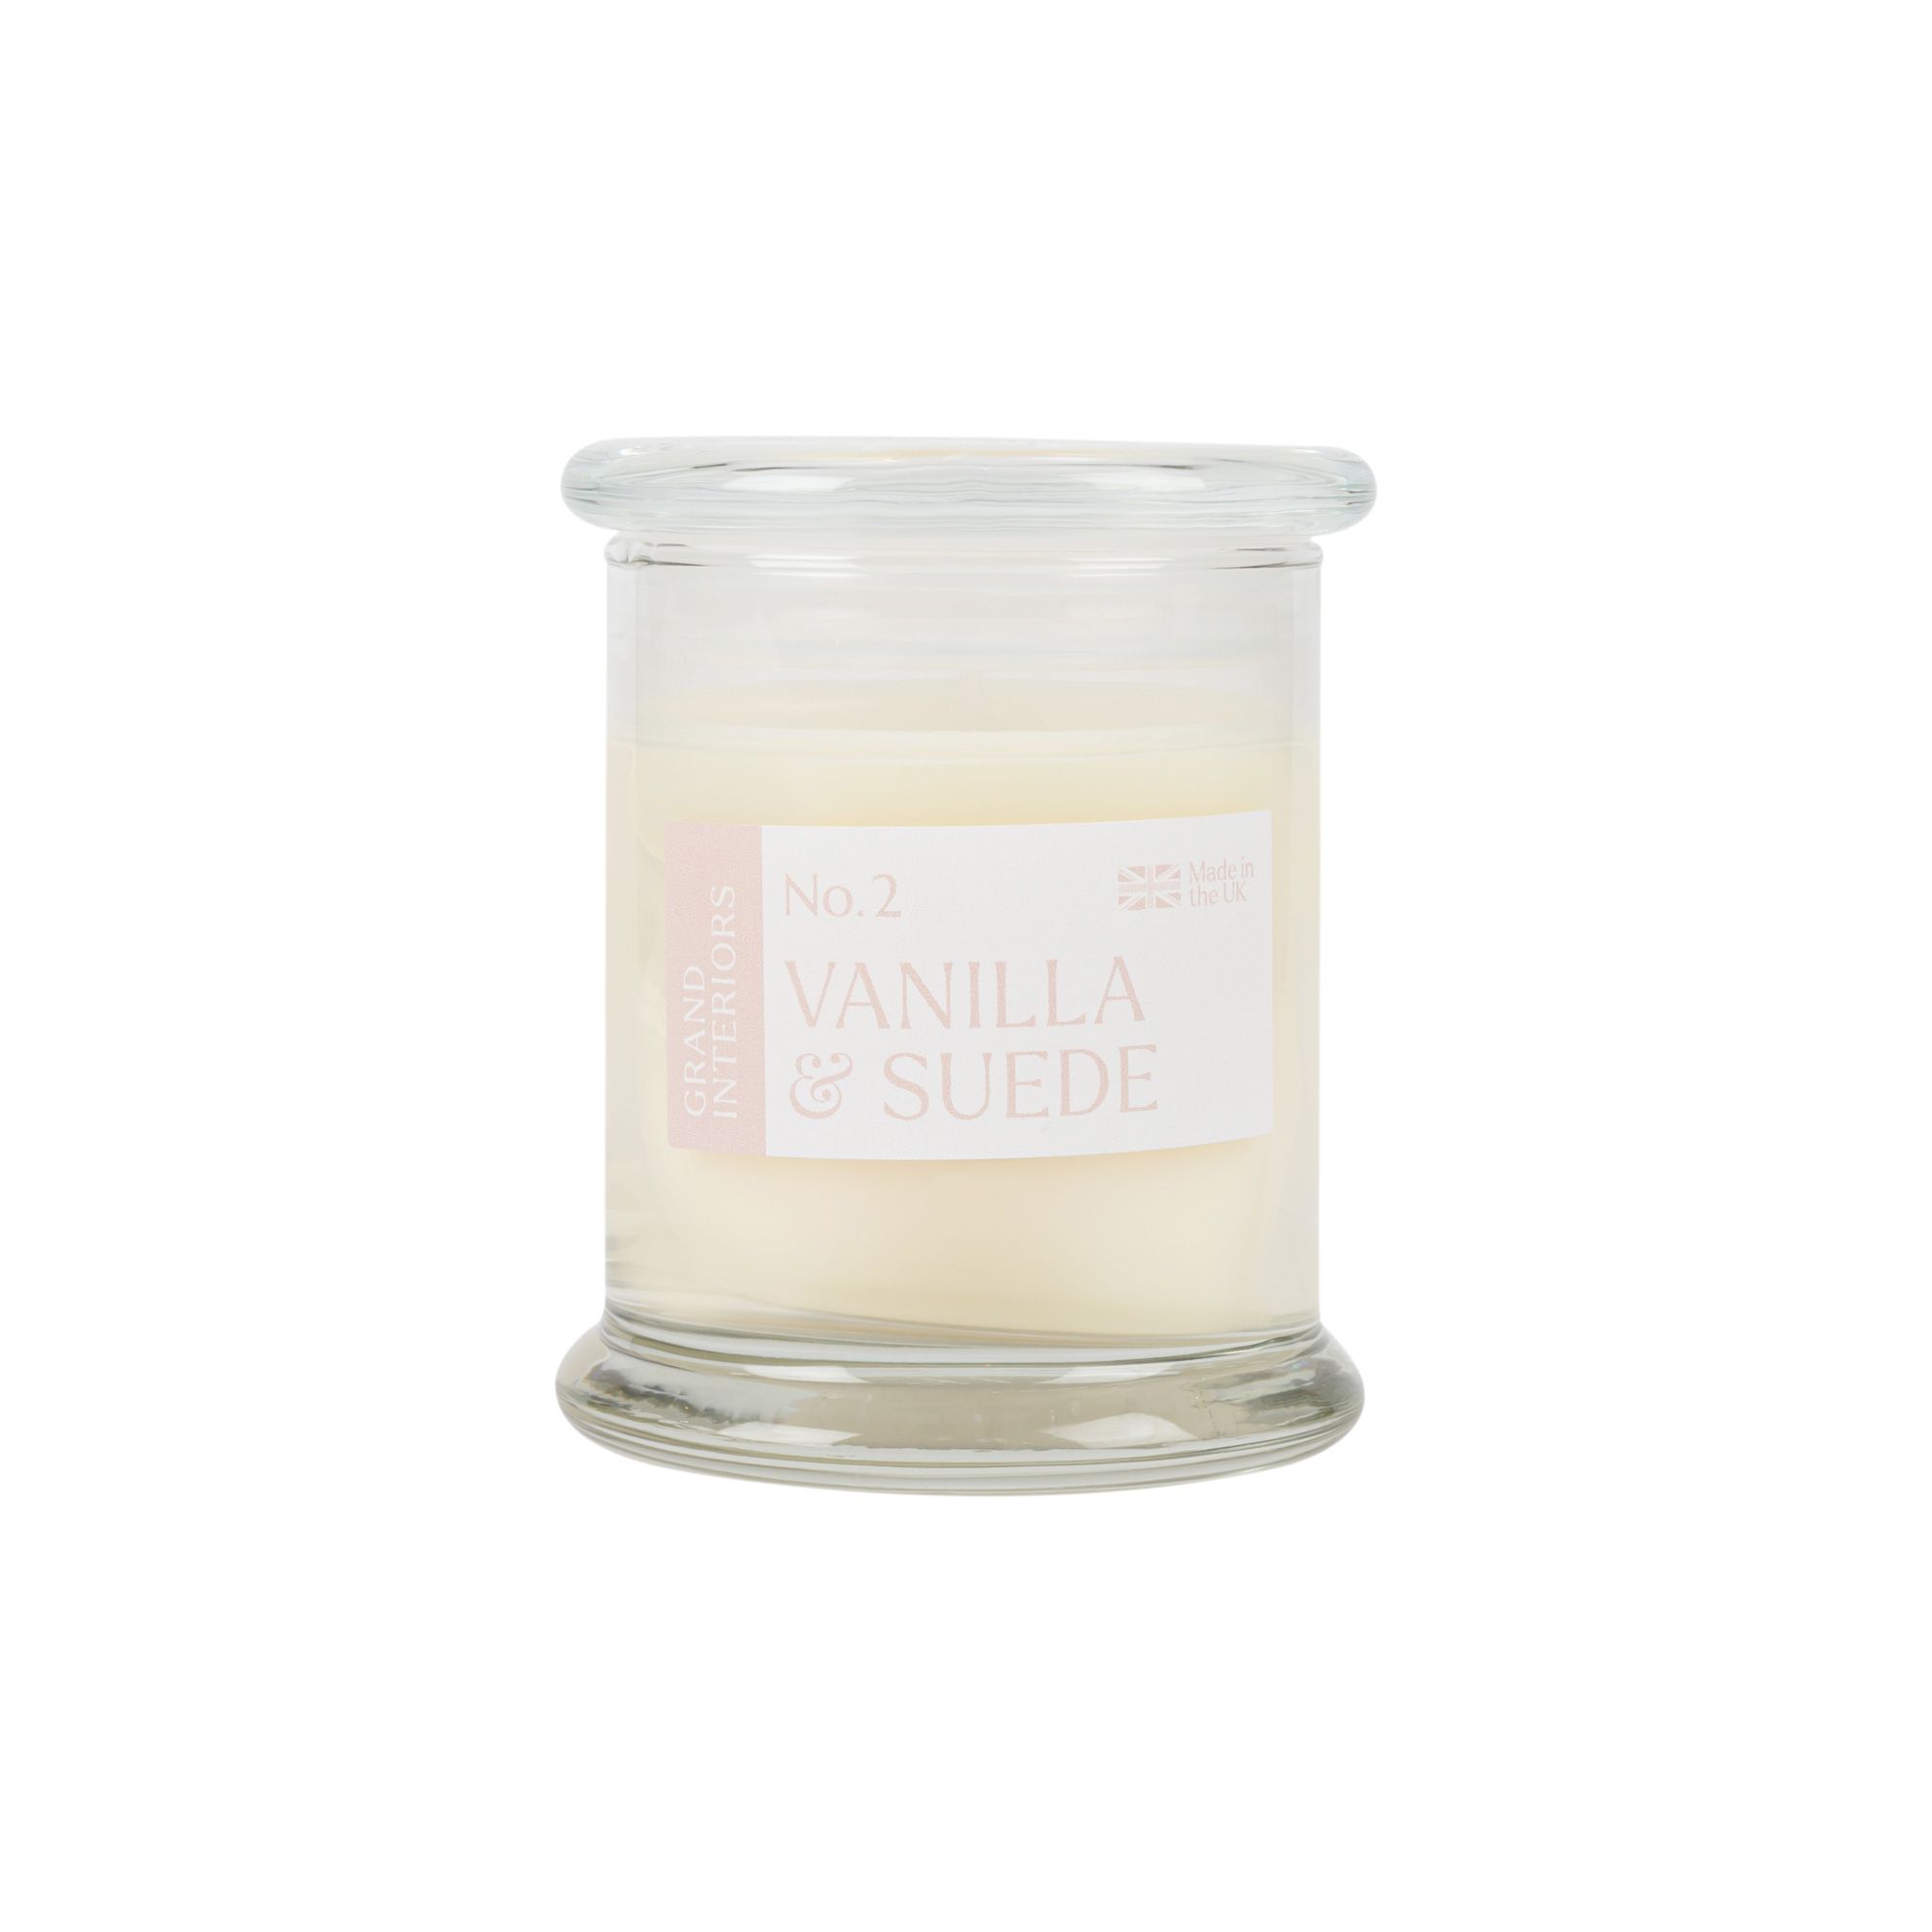 Wax lyrical Cream Vanilla & suede Jar candle 772g, Medium